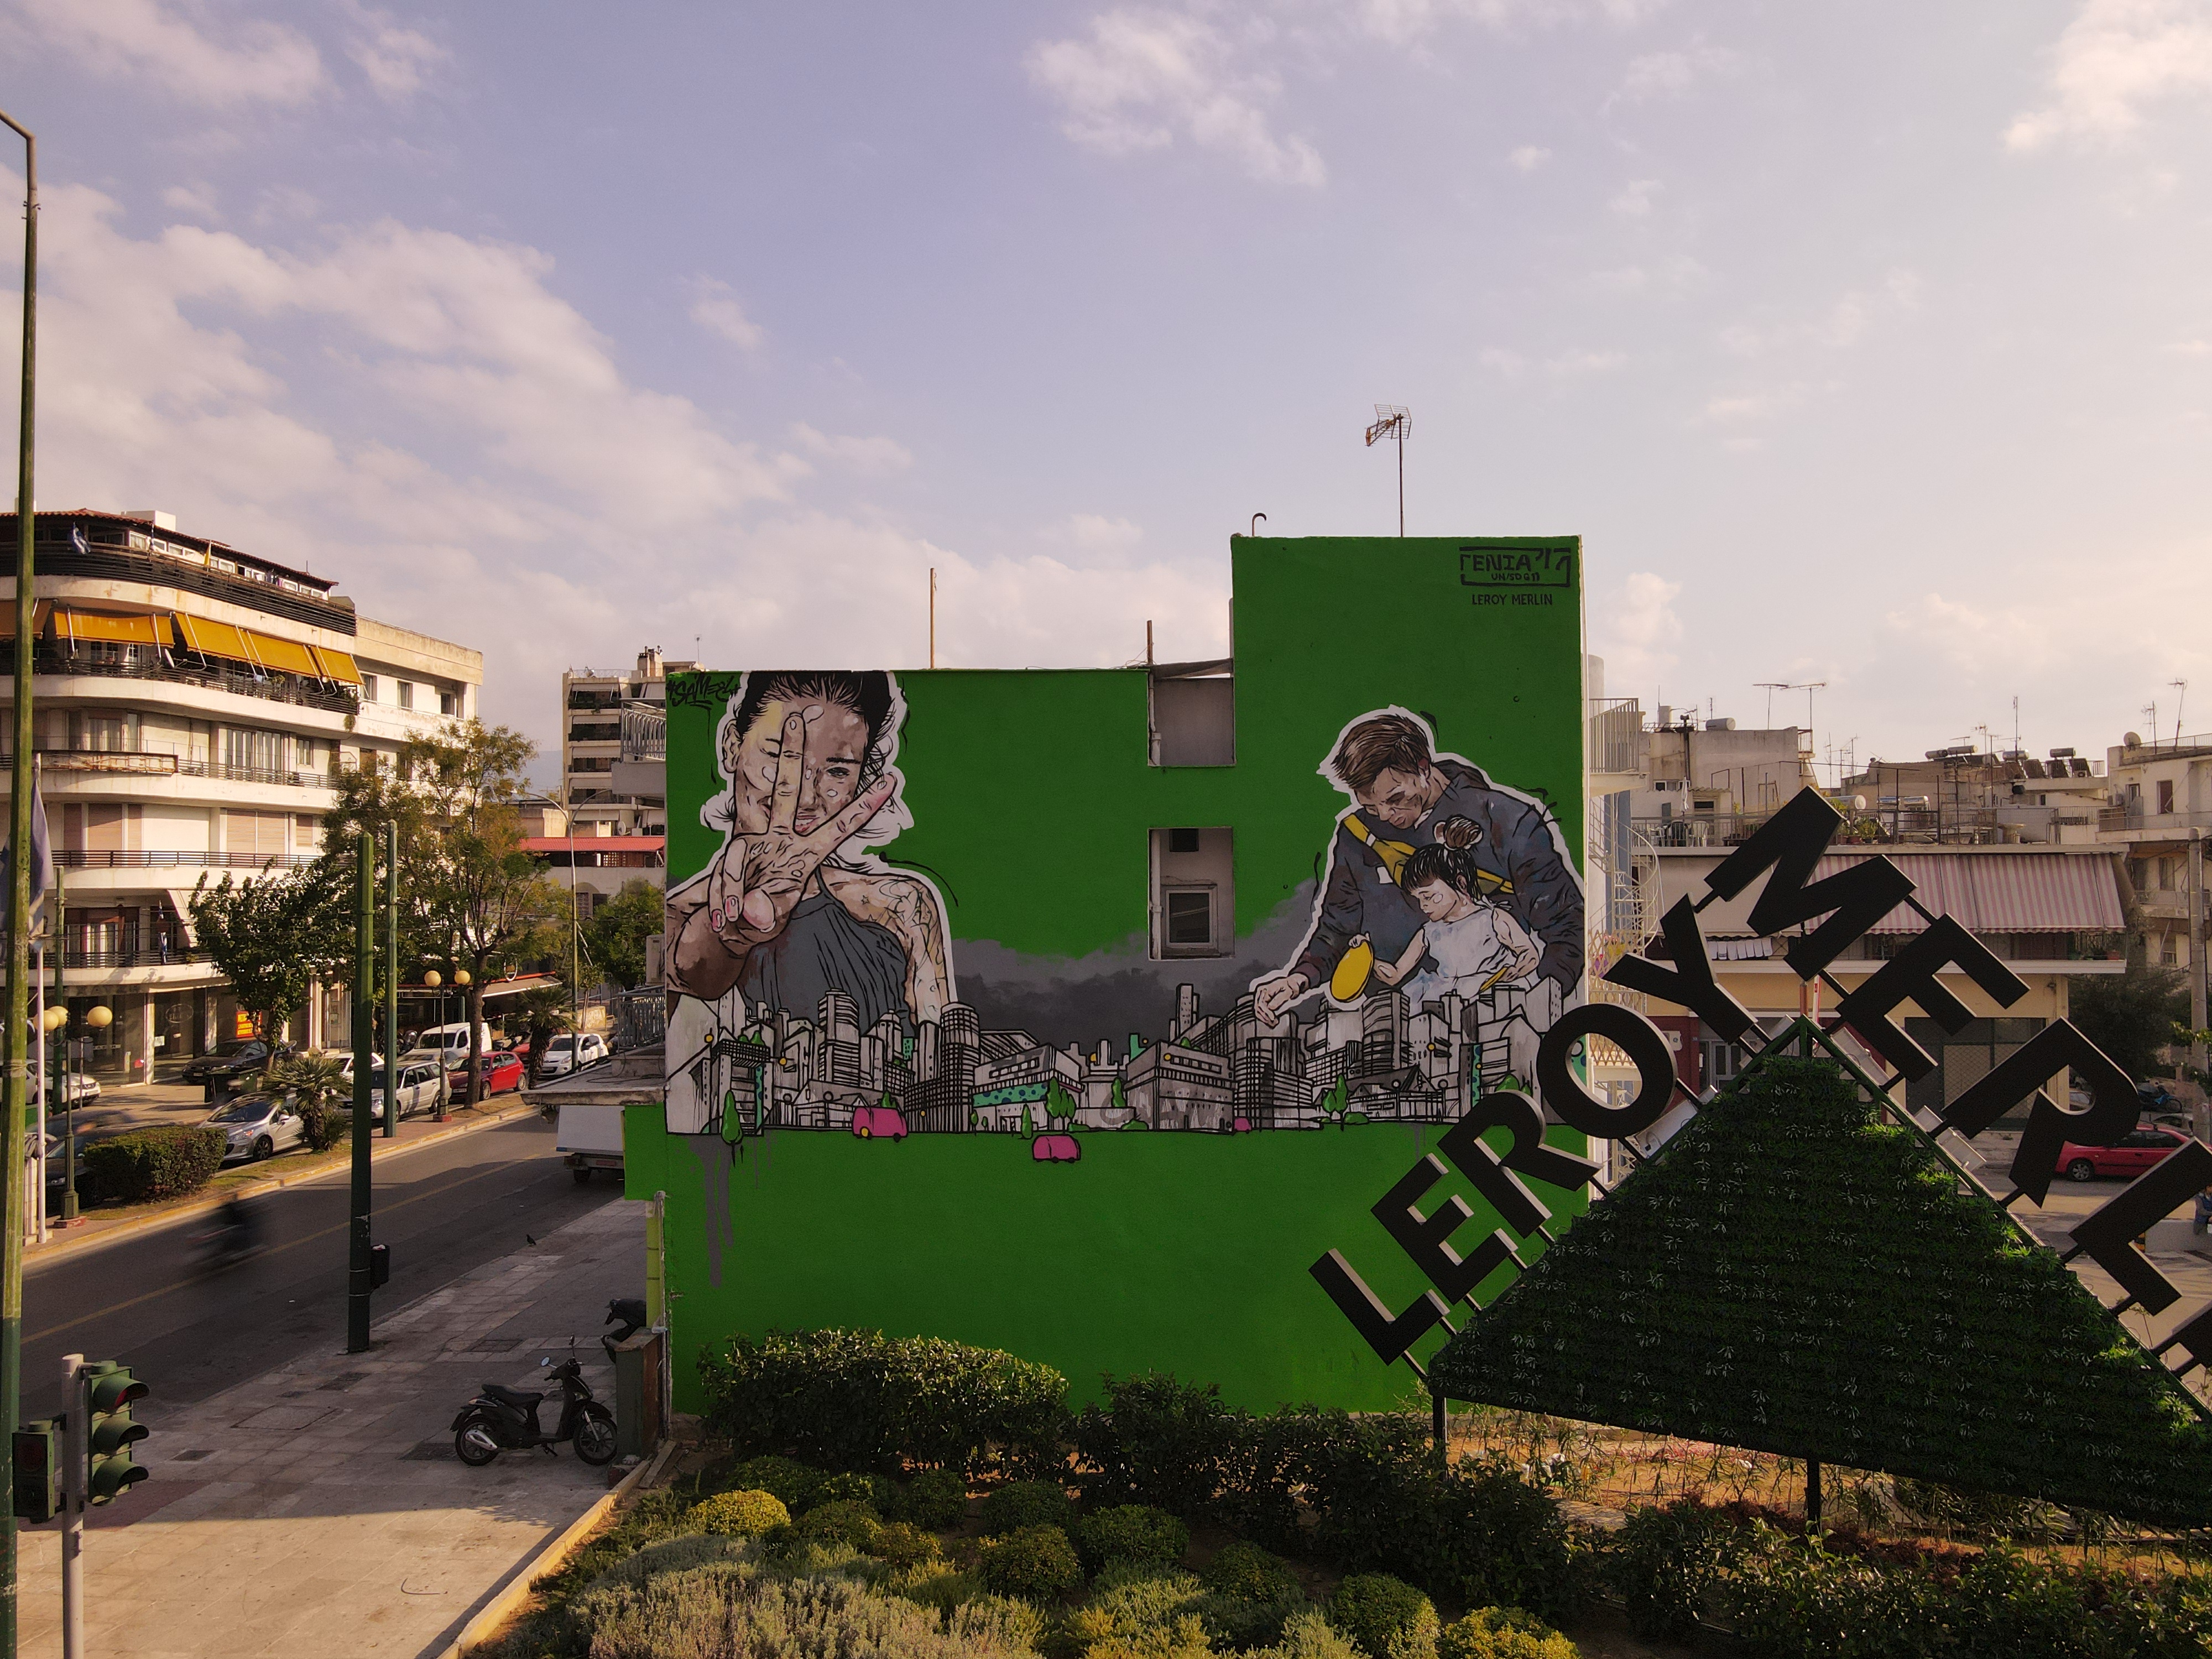  H LEROY MERLIN φροντίζει τις πόλεις #giakalo οραματιζόμενη ένα πιο βιώσιμο μέλλον